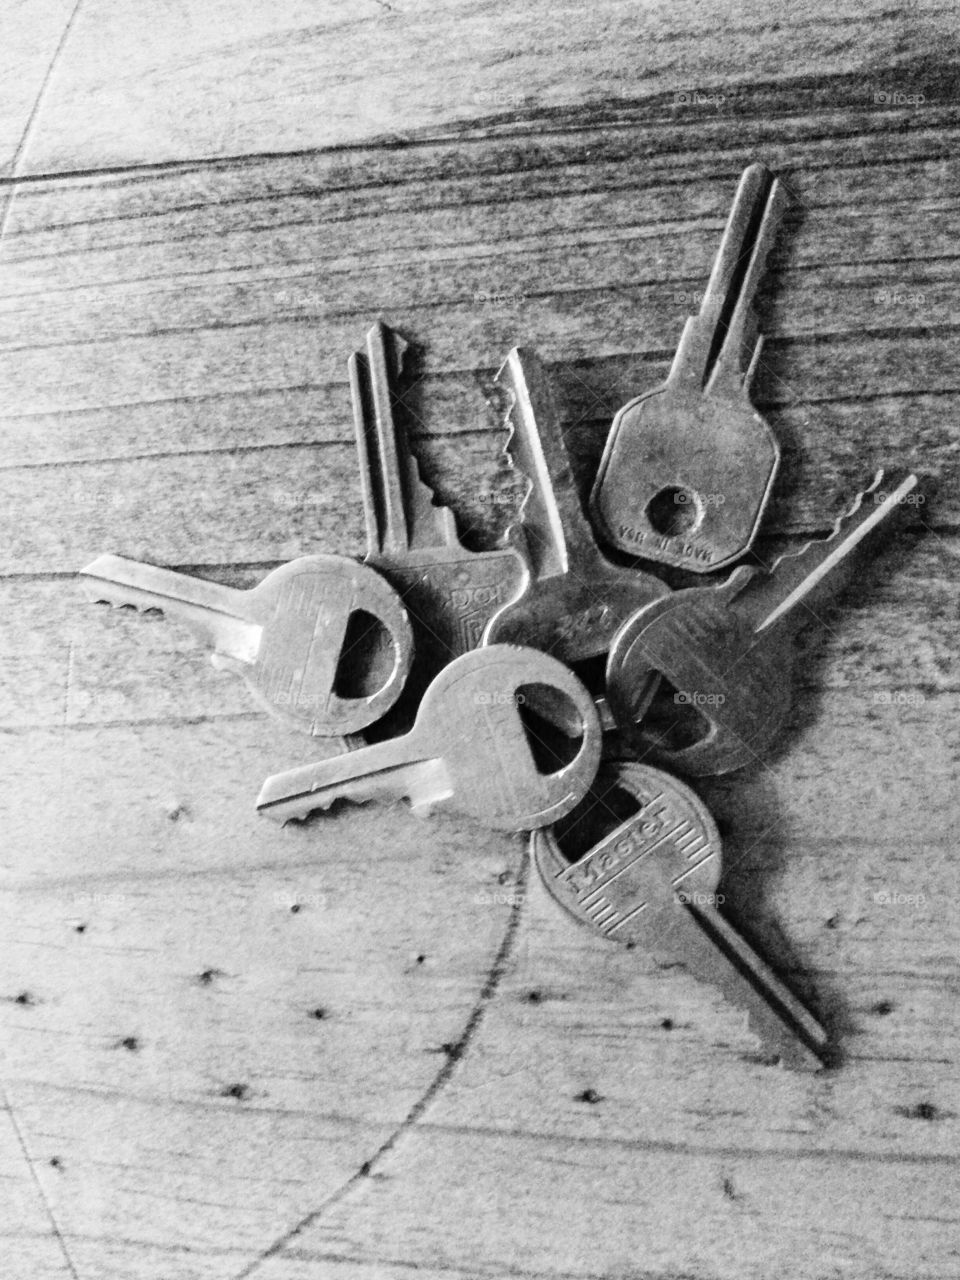 Keys in black and white